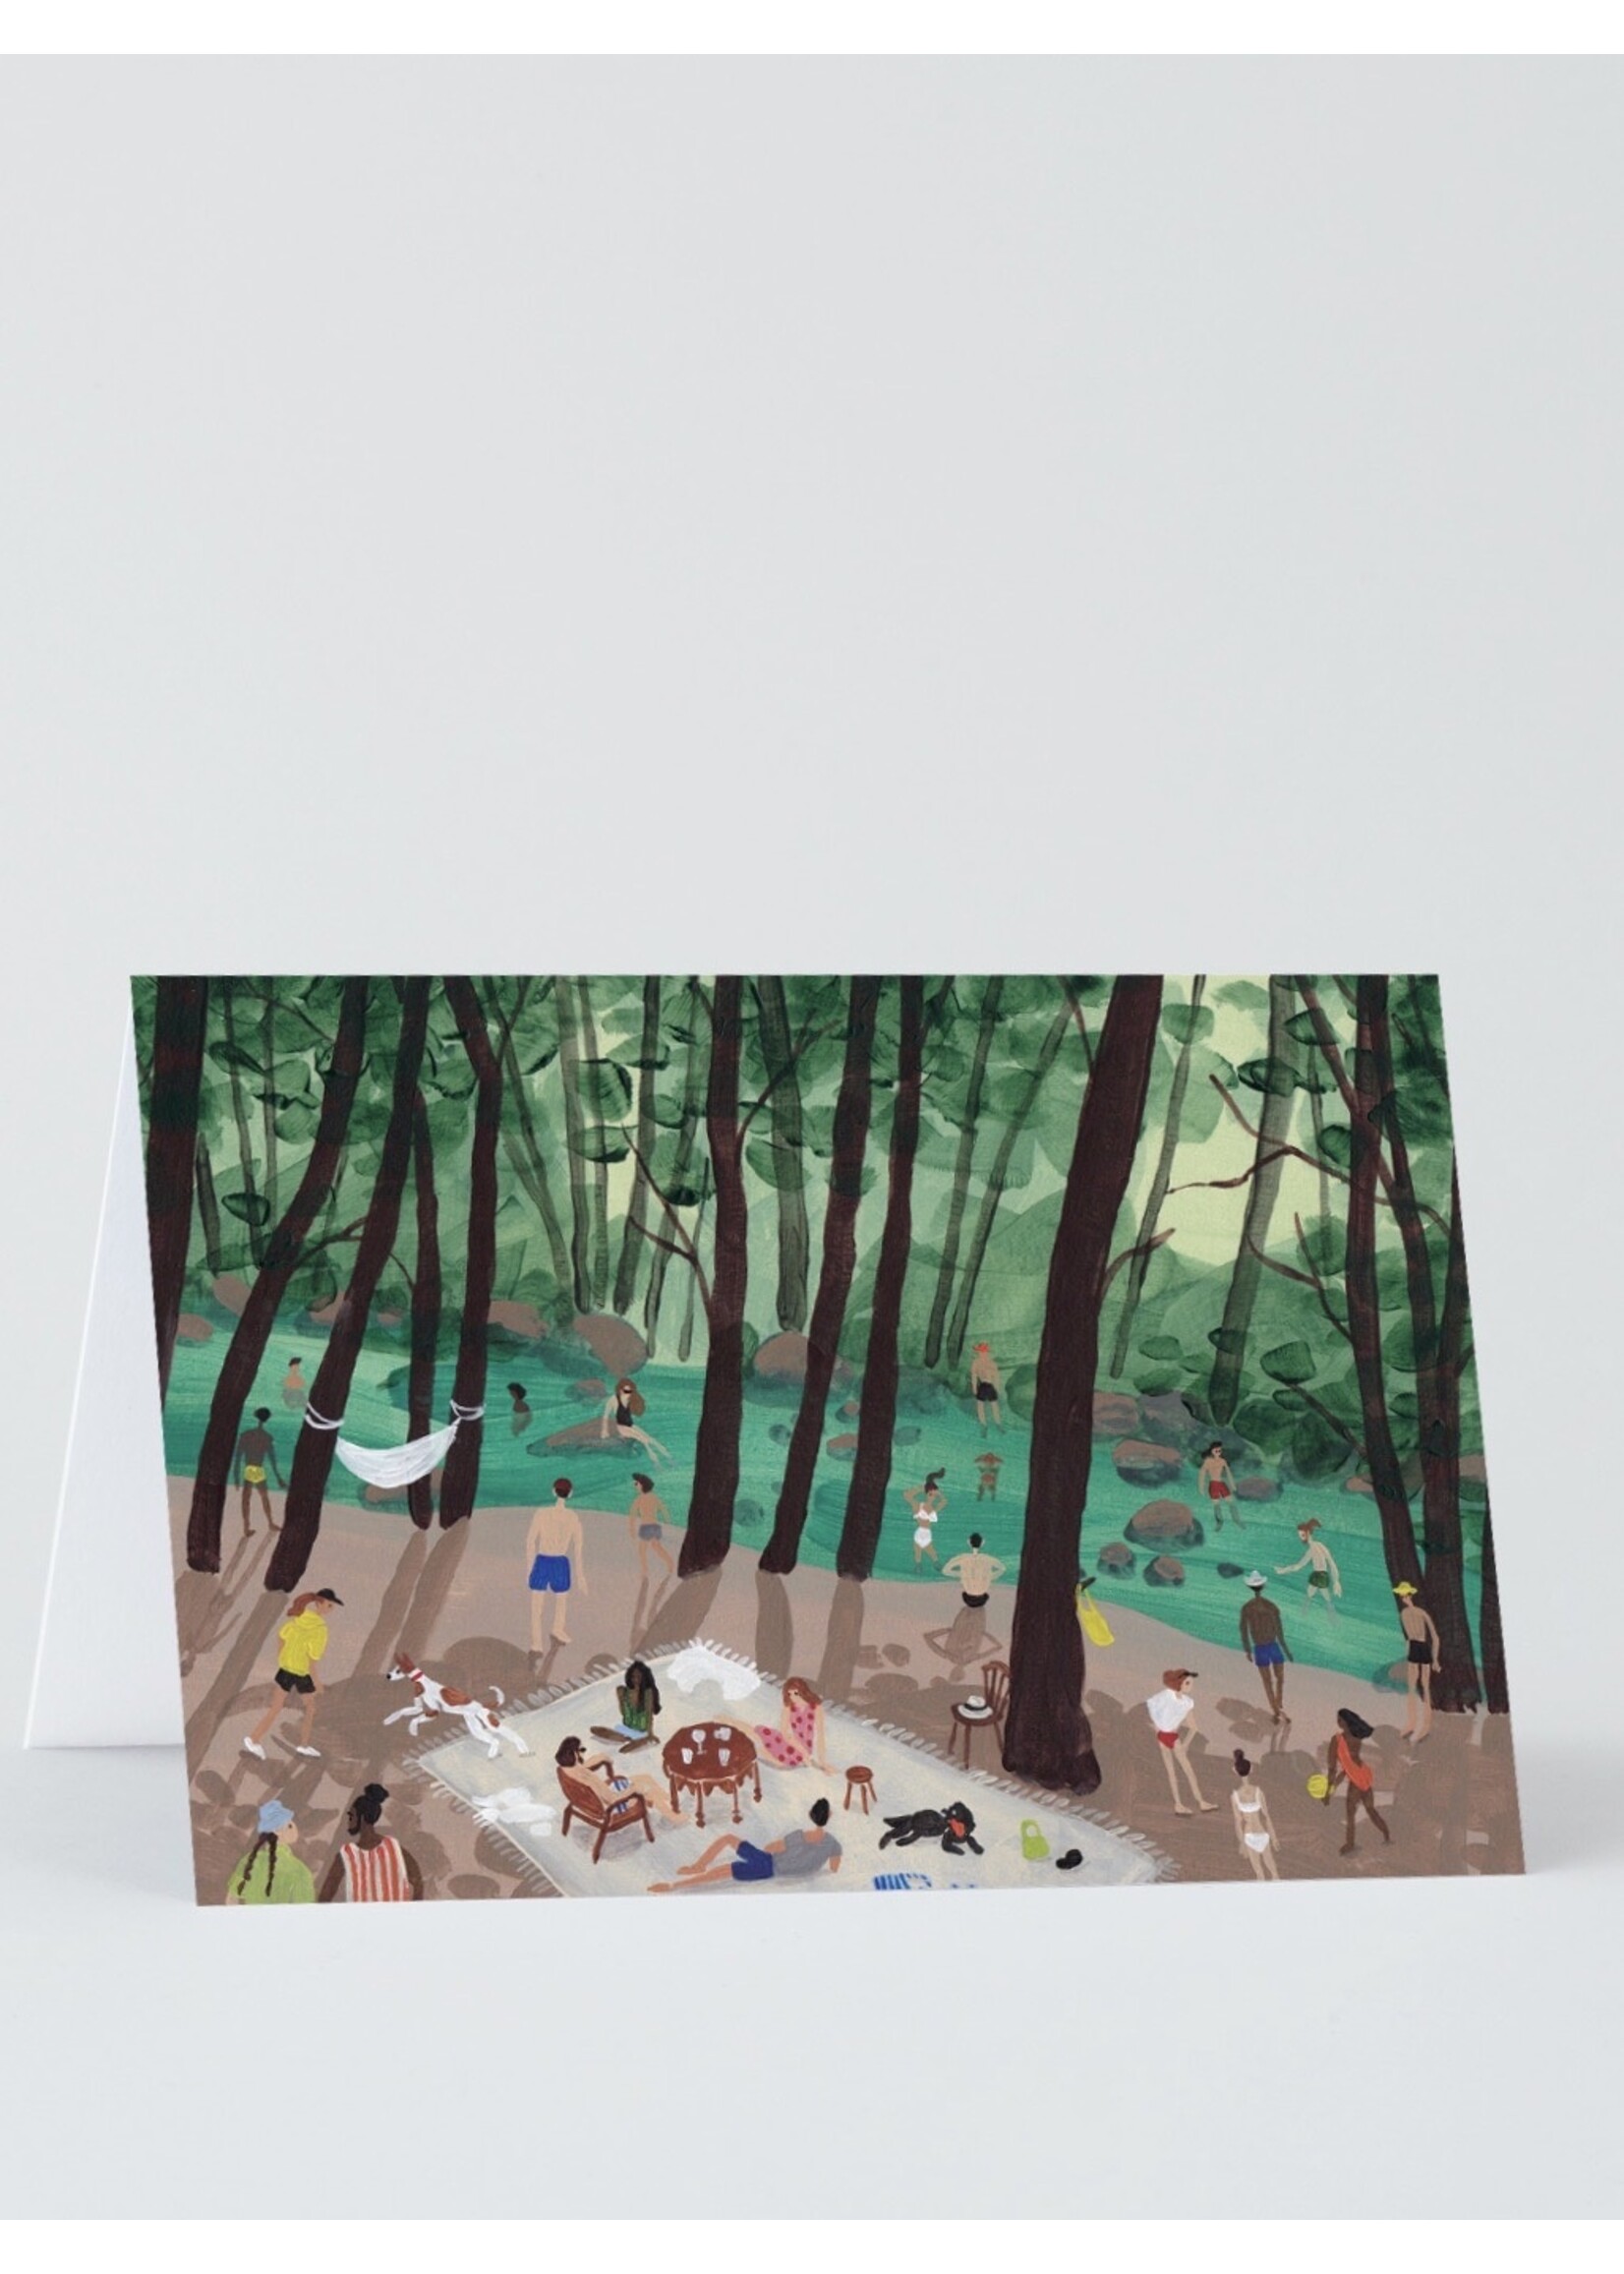 Wrap Stationery Art cards "Yukiko Noritake" by Wrap Stationnery